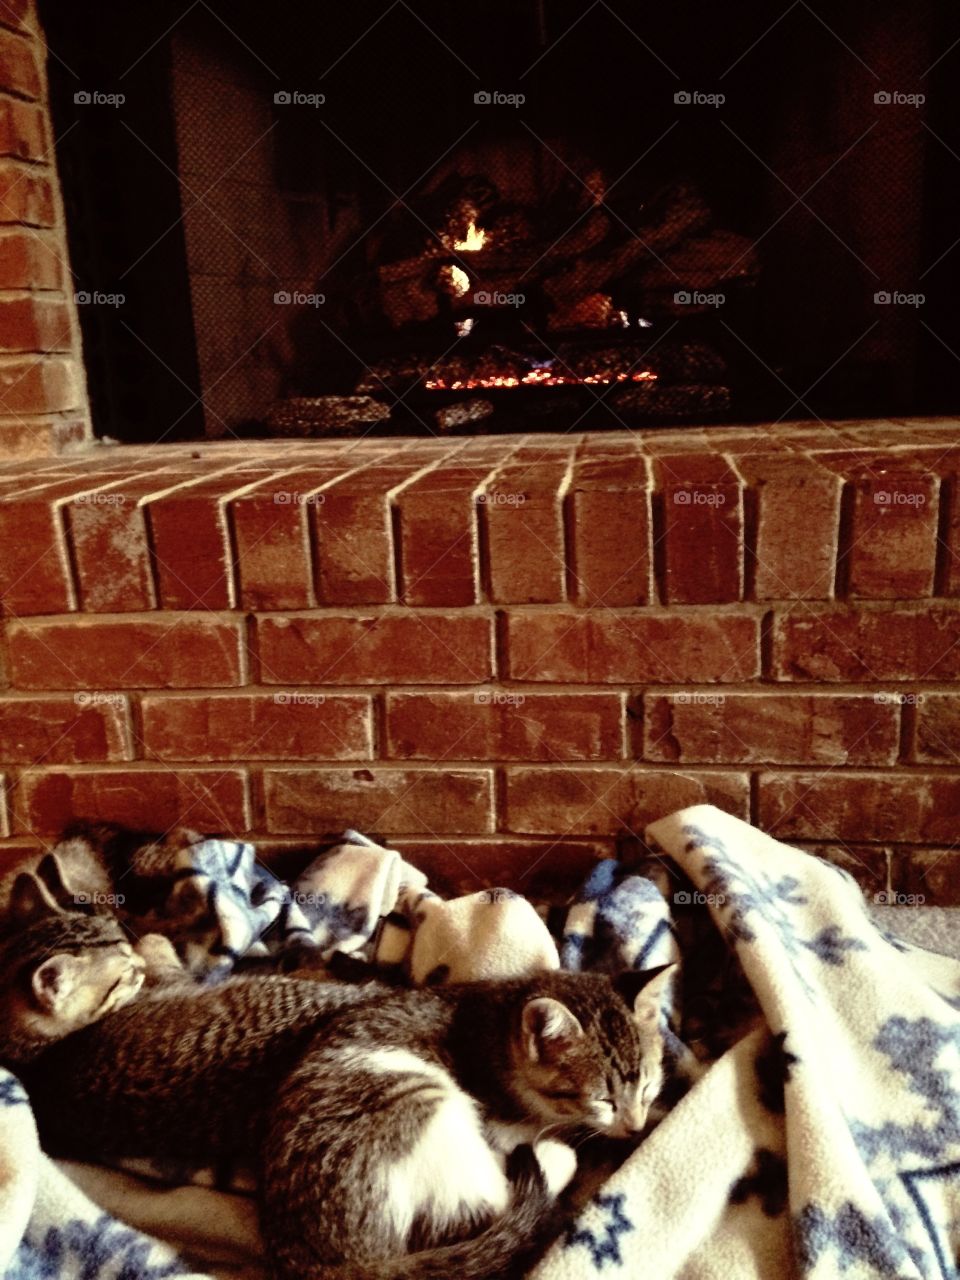 Fireplace Kittens. Kittens asleep by the fireplace. 